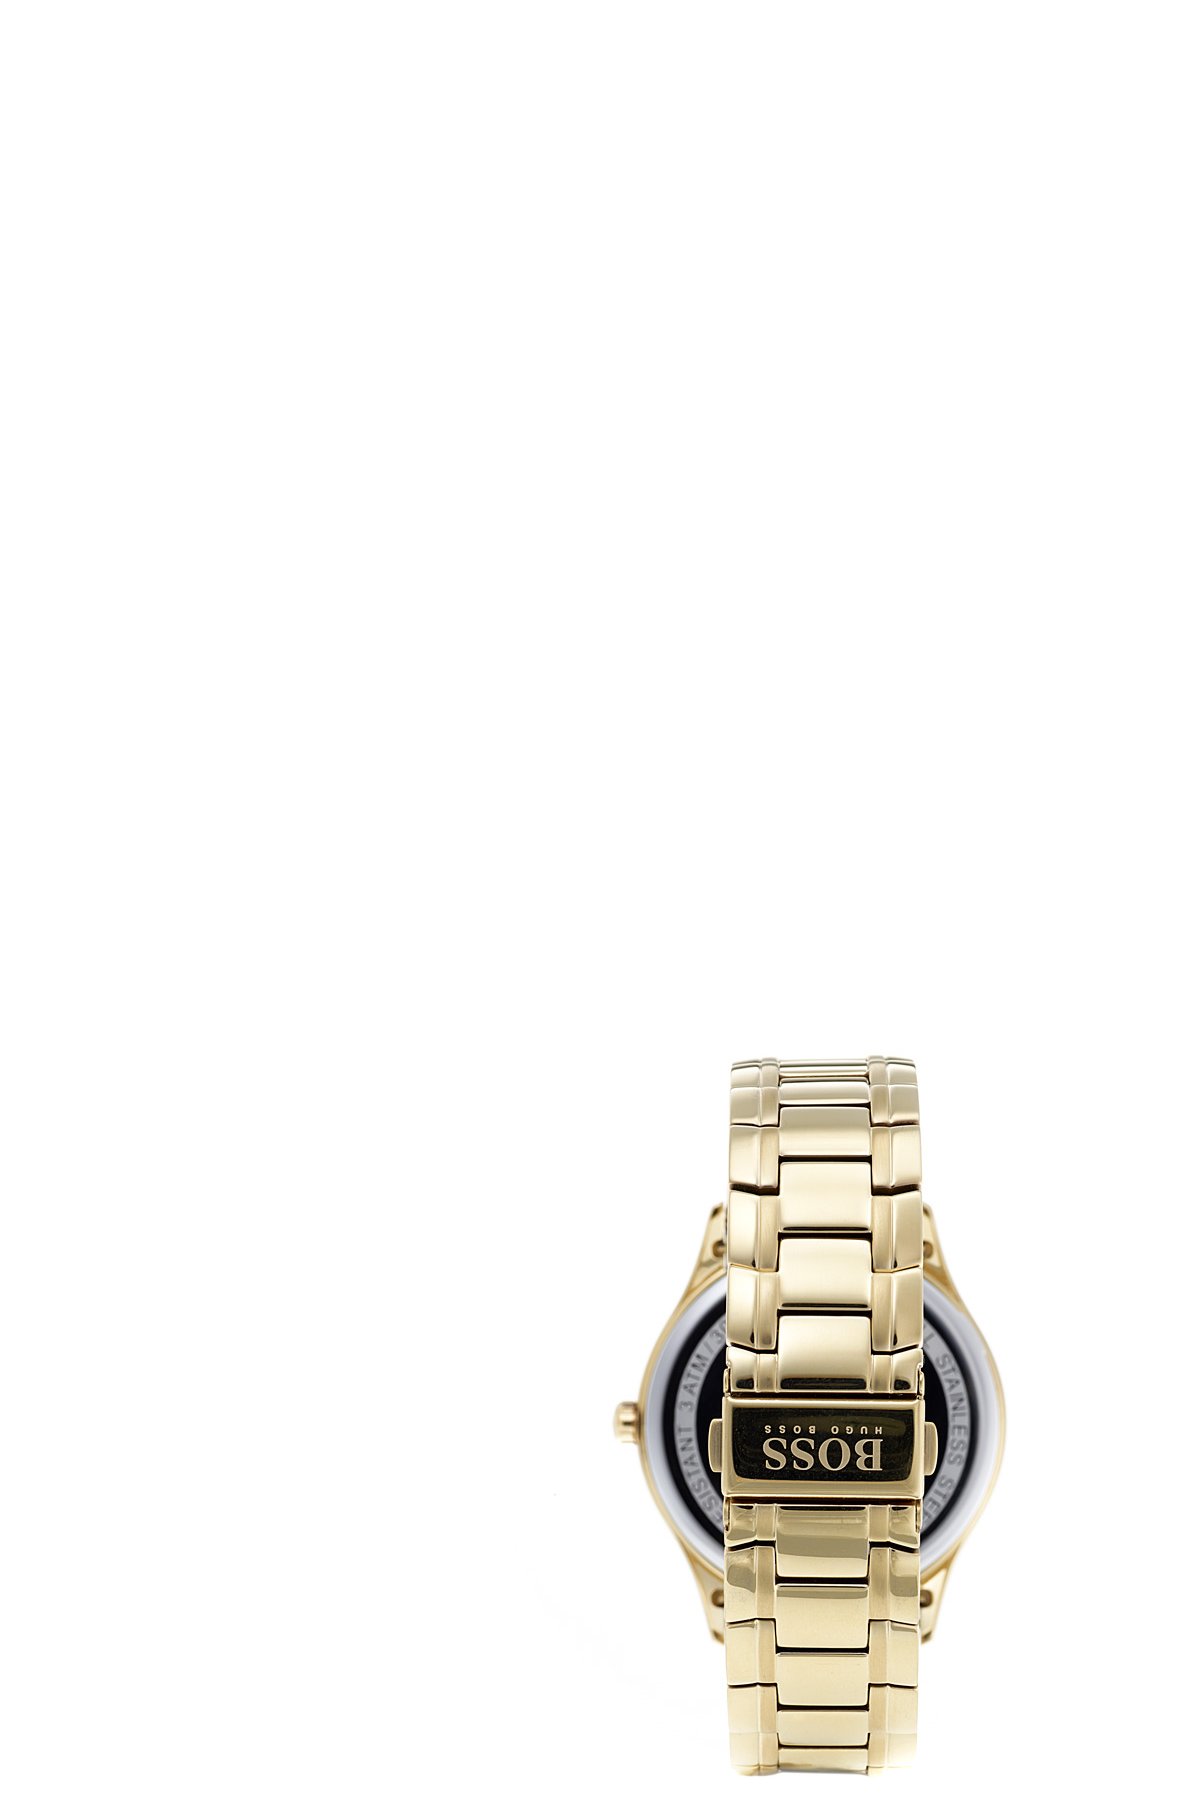 stemning bestøve Blive BOSS - Govenor Casual Sport, Gold-Tone Steel Watch | 1513521